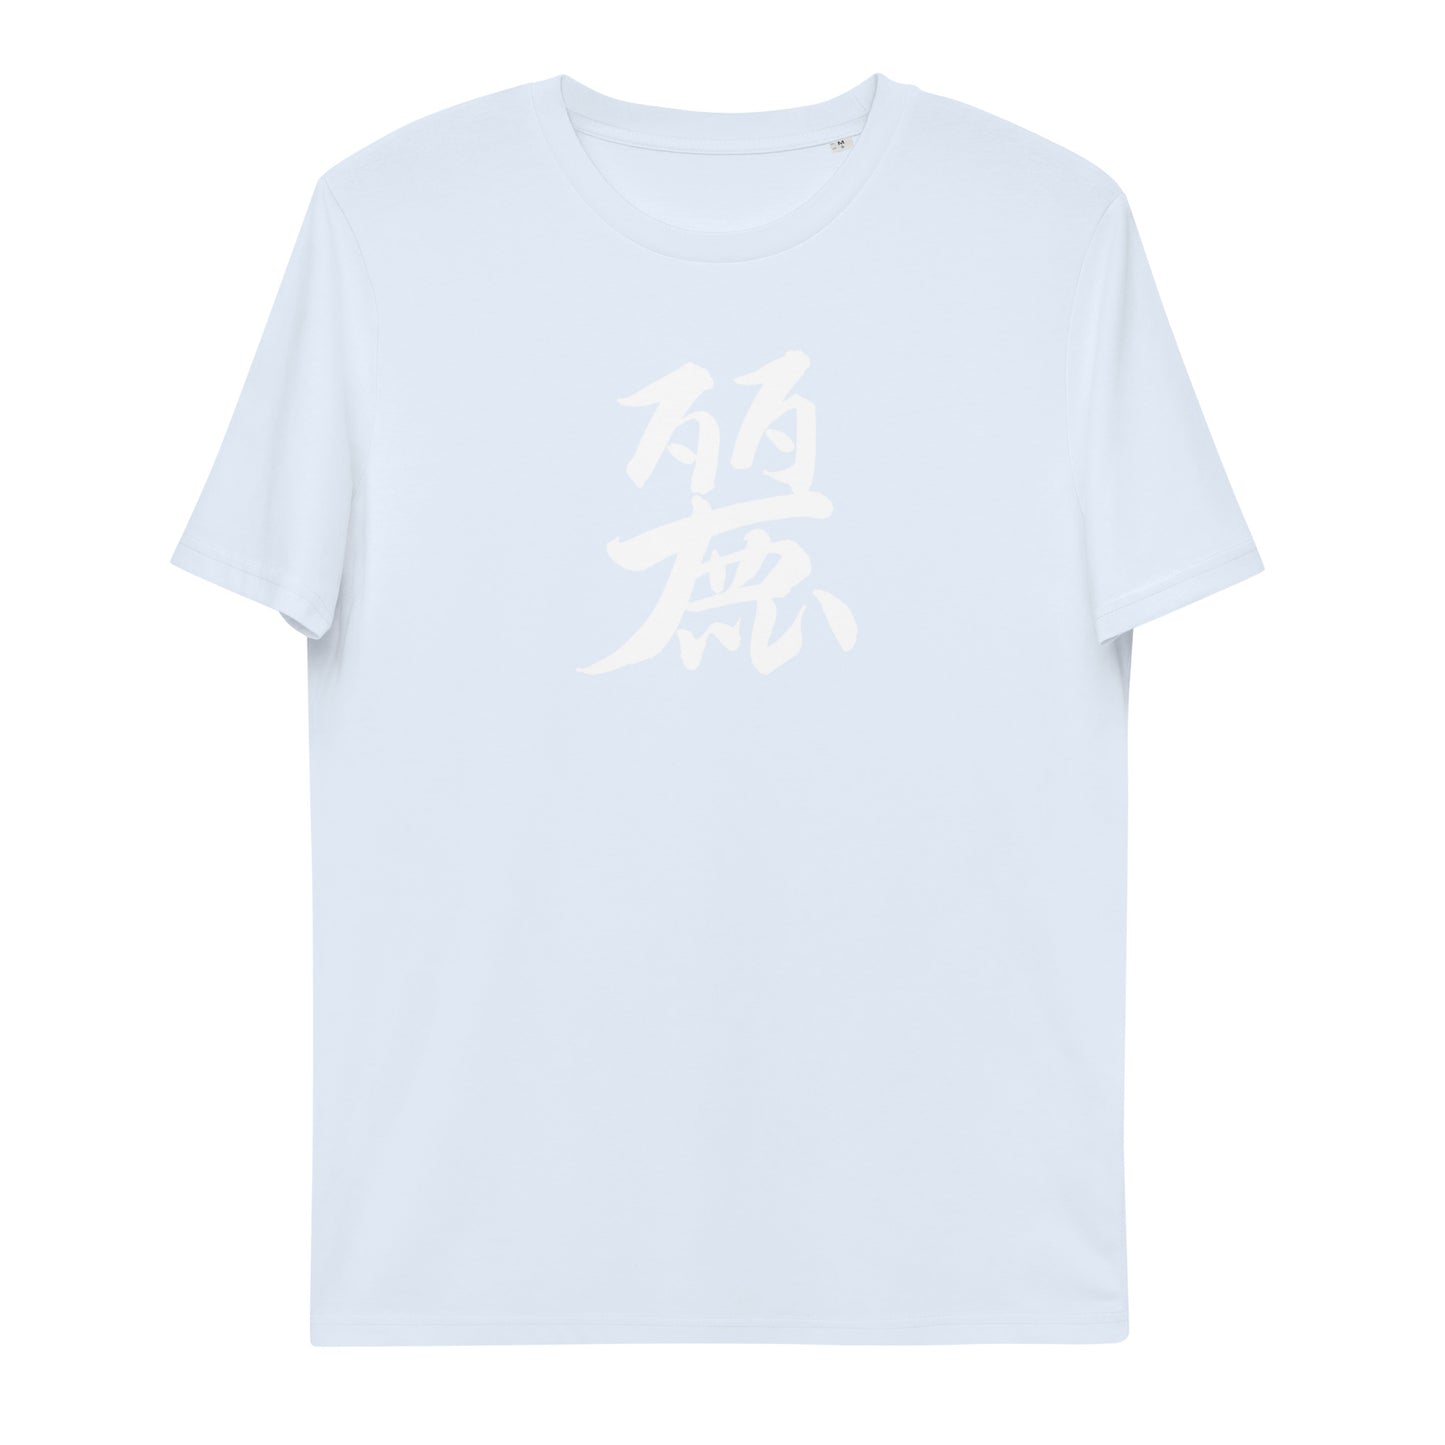 Hatsuko Unisex organic cotton t-shirt